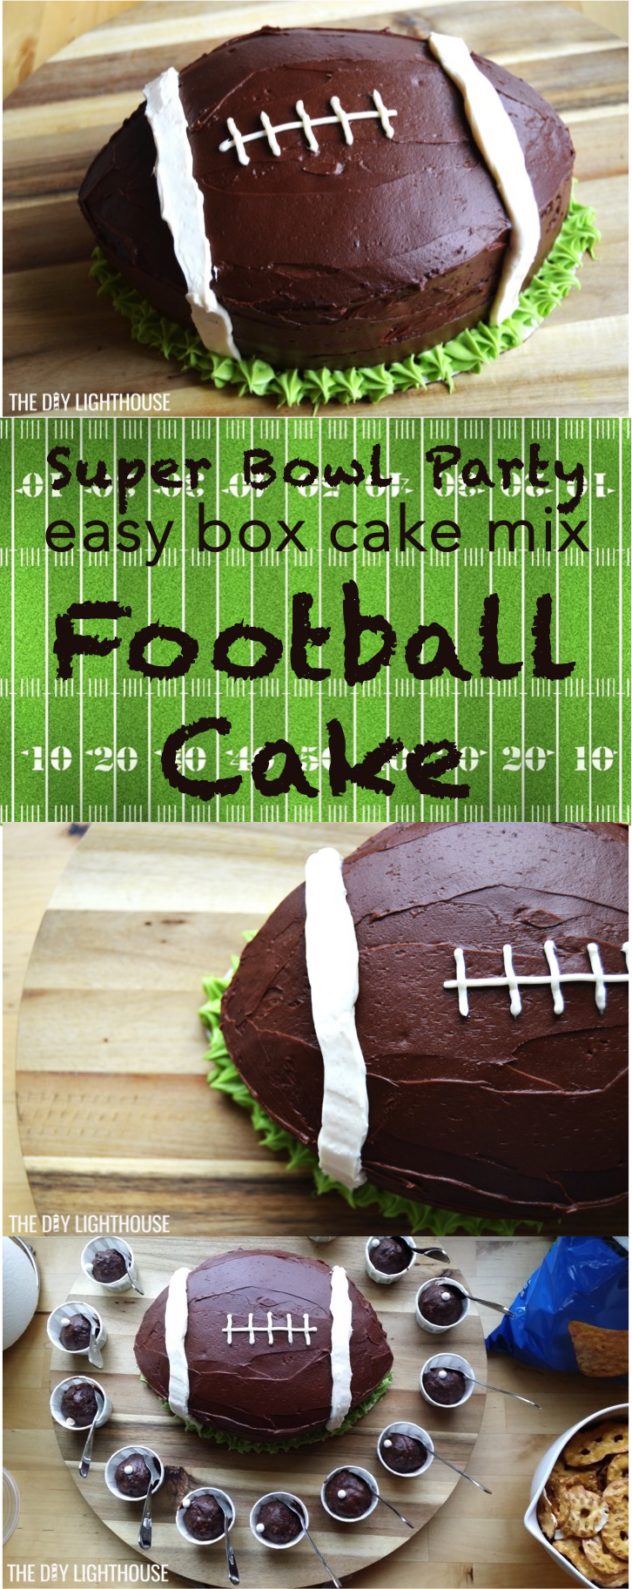 super-bowl-party-easy-box-cake-mix-football-cake